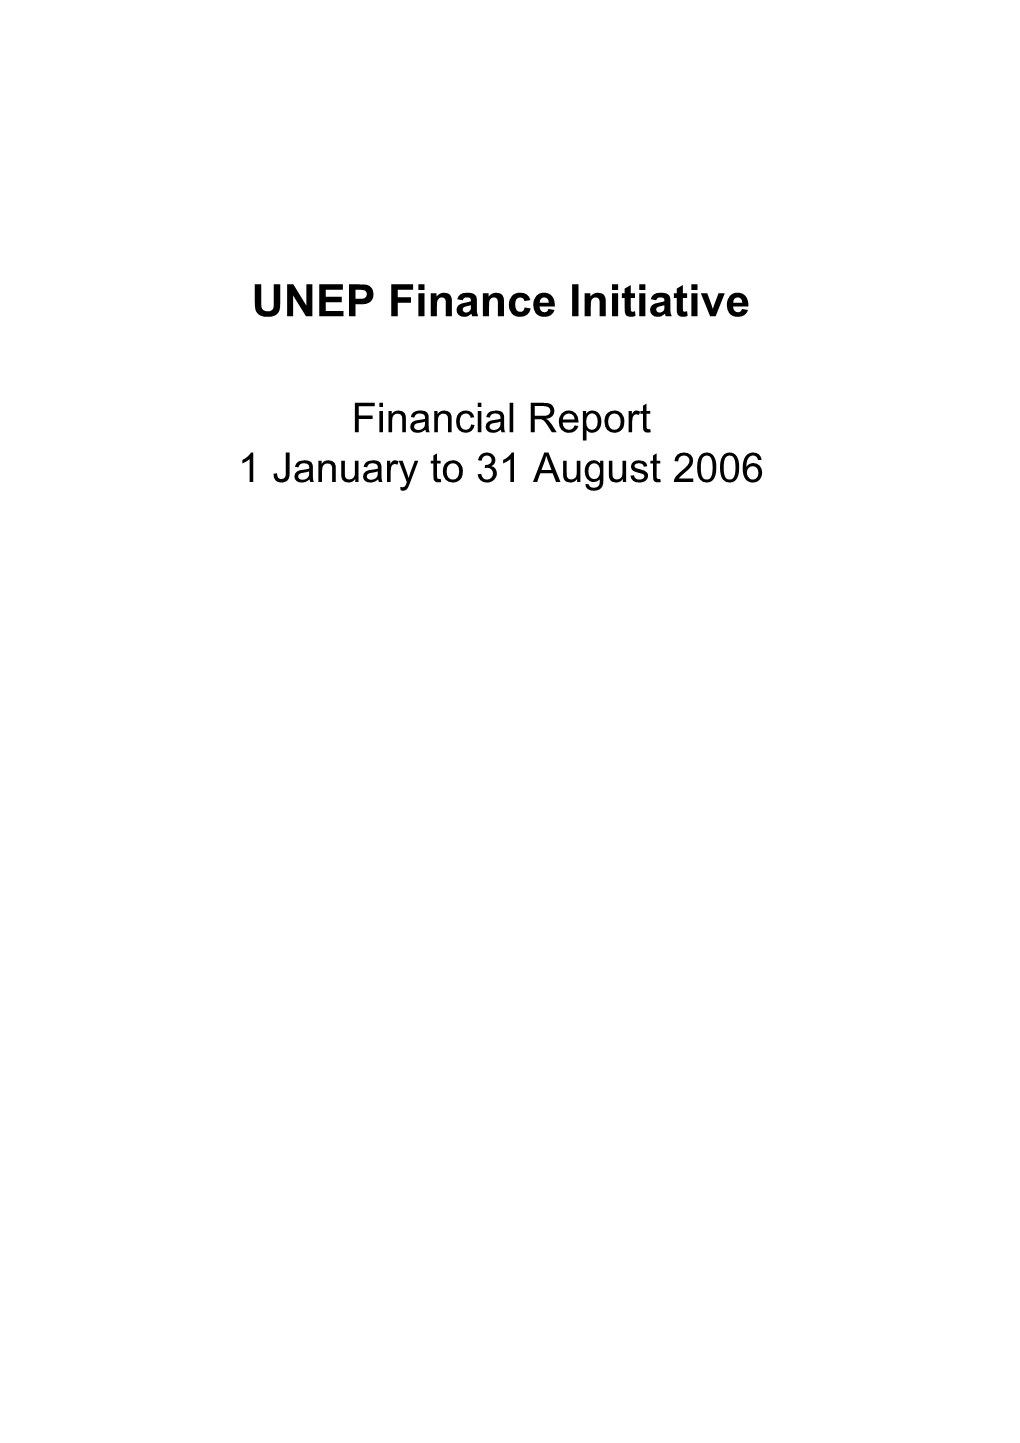 UNEP FI Financial Report